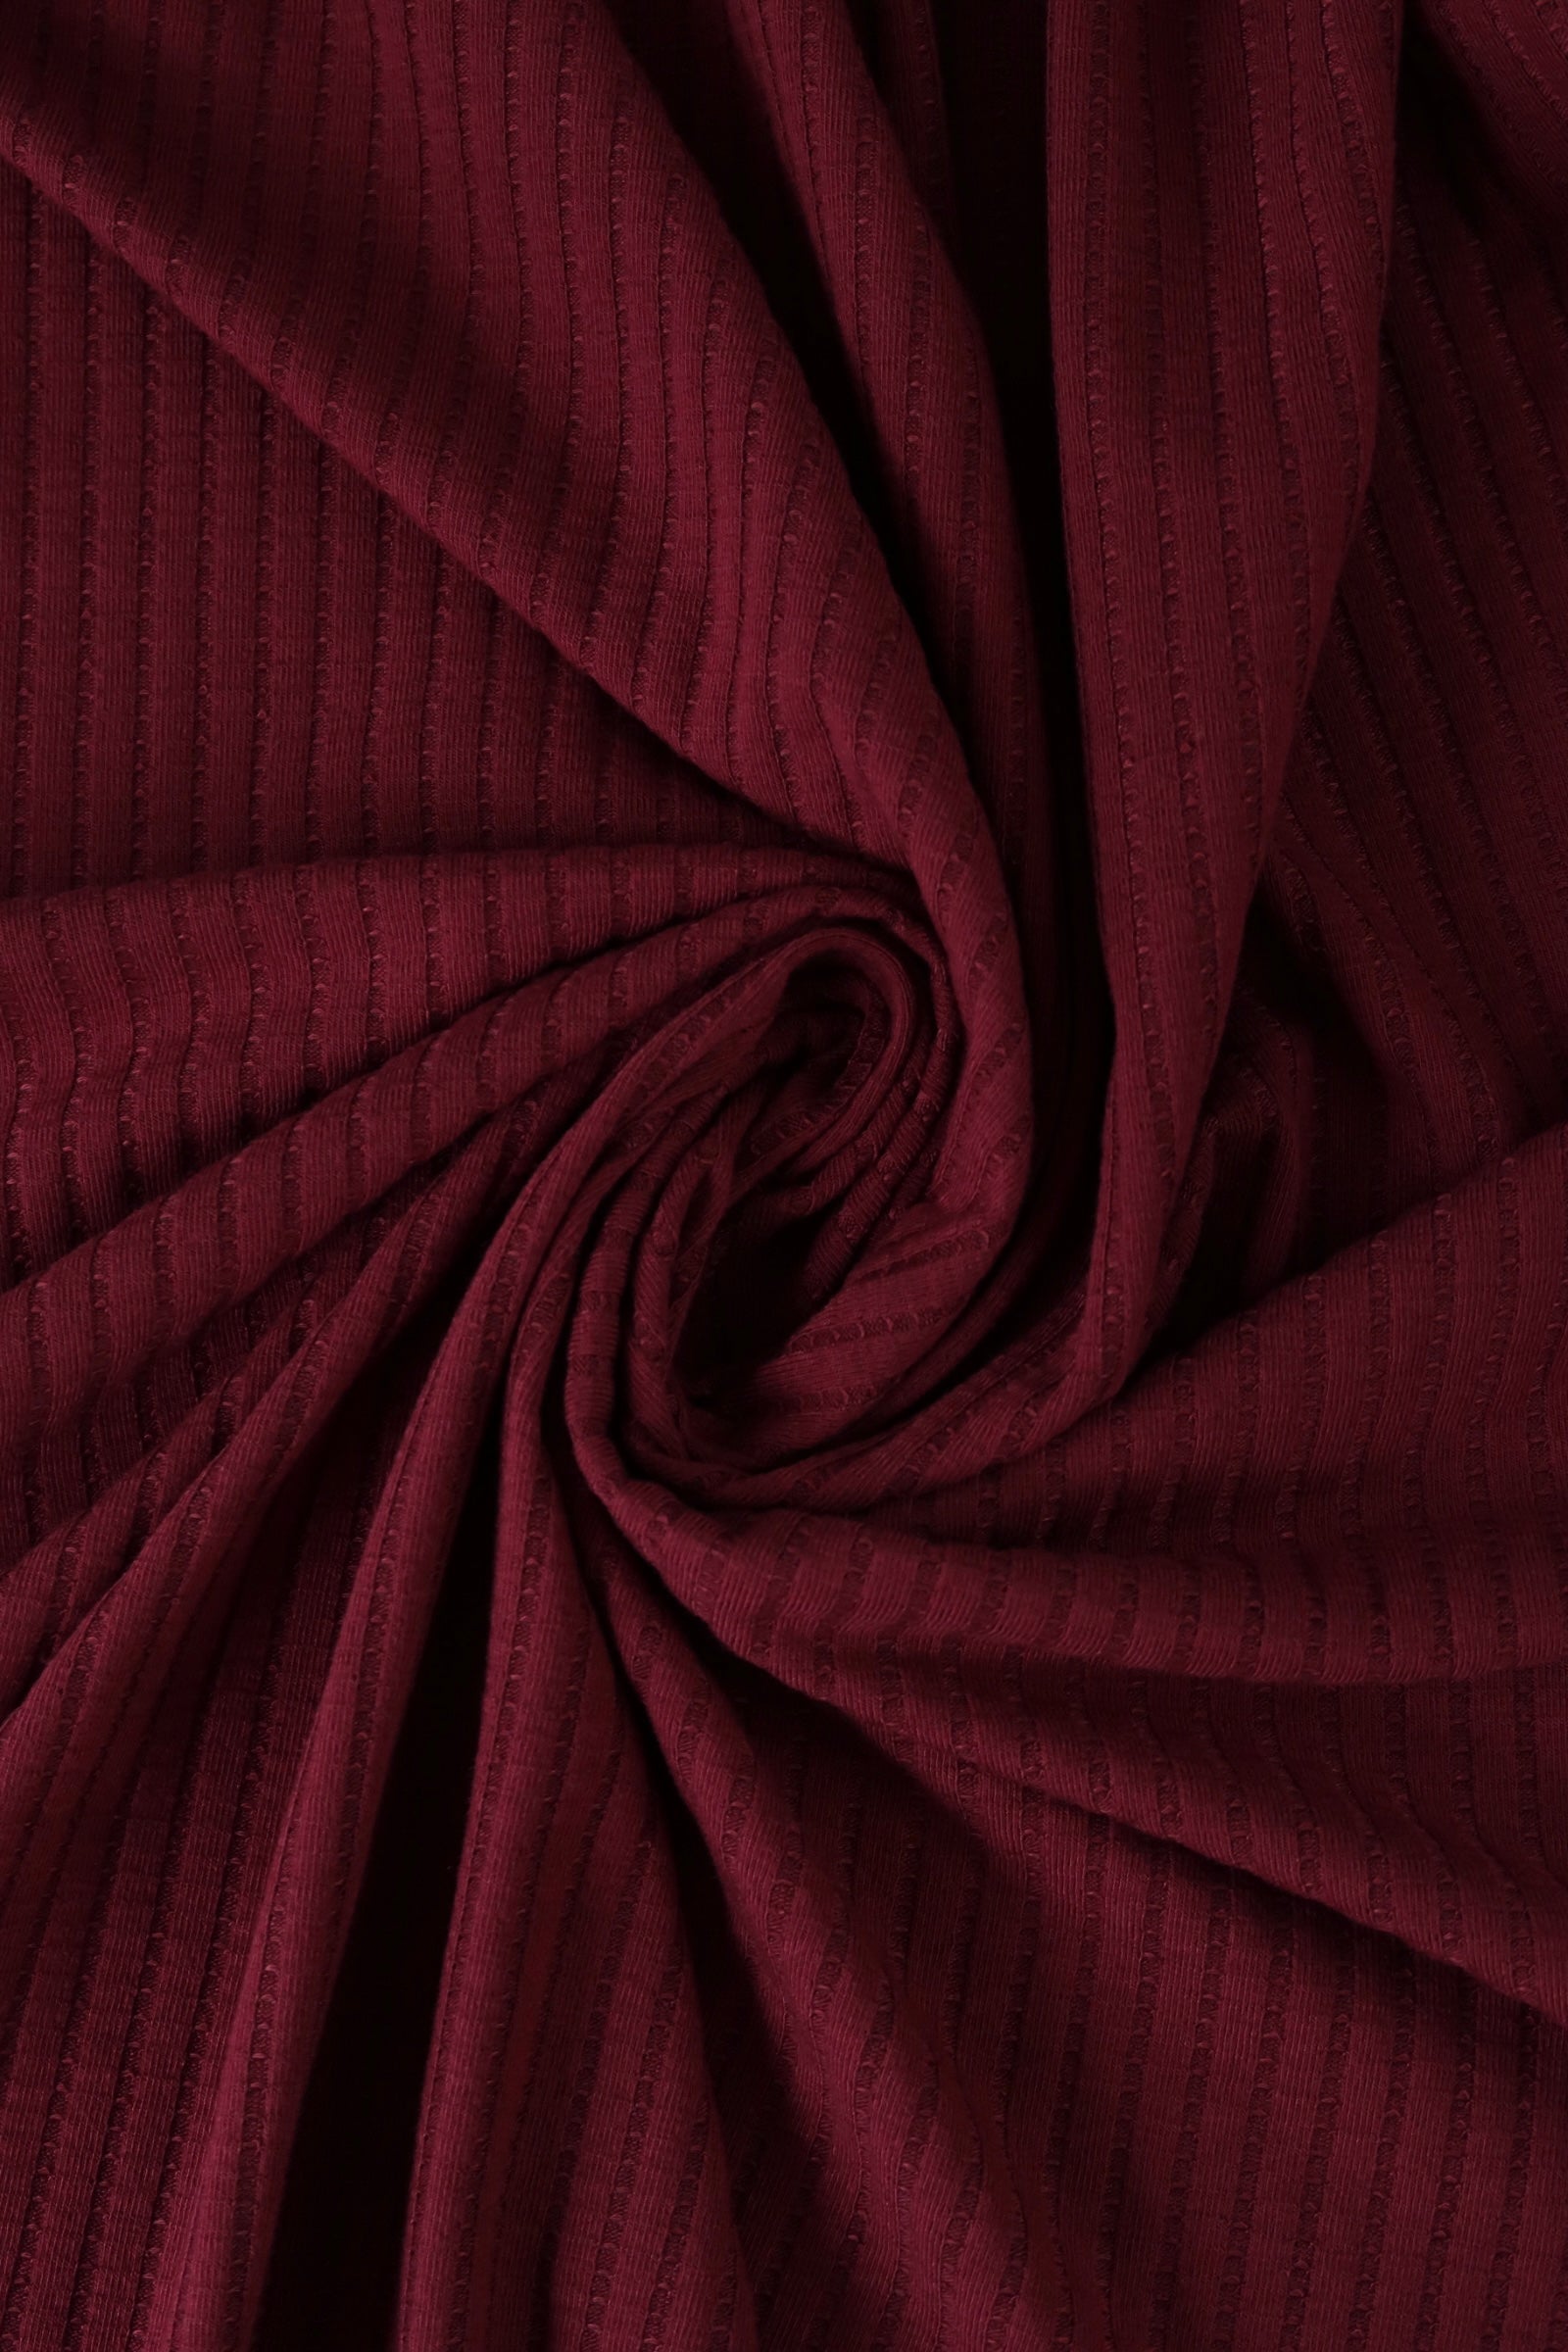 Cotton Spandex 1x1 Rib Knit Fabric - Navy - Deadstock